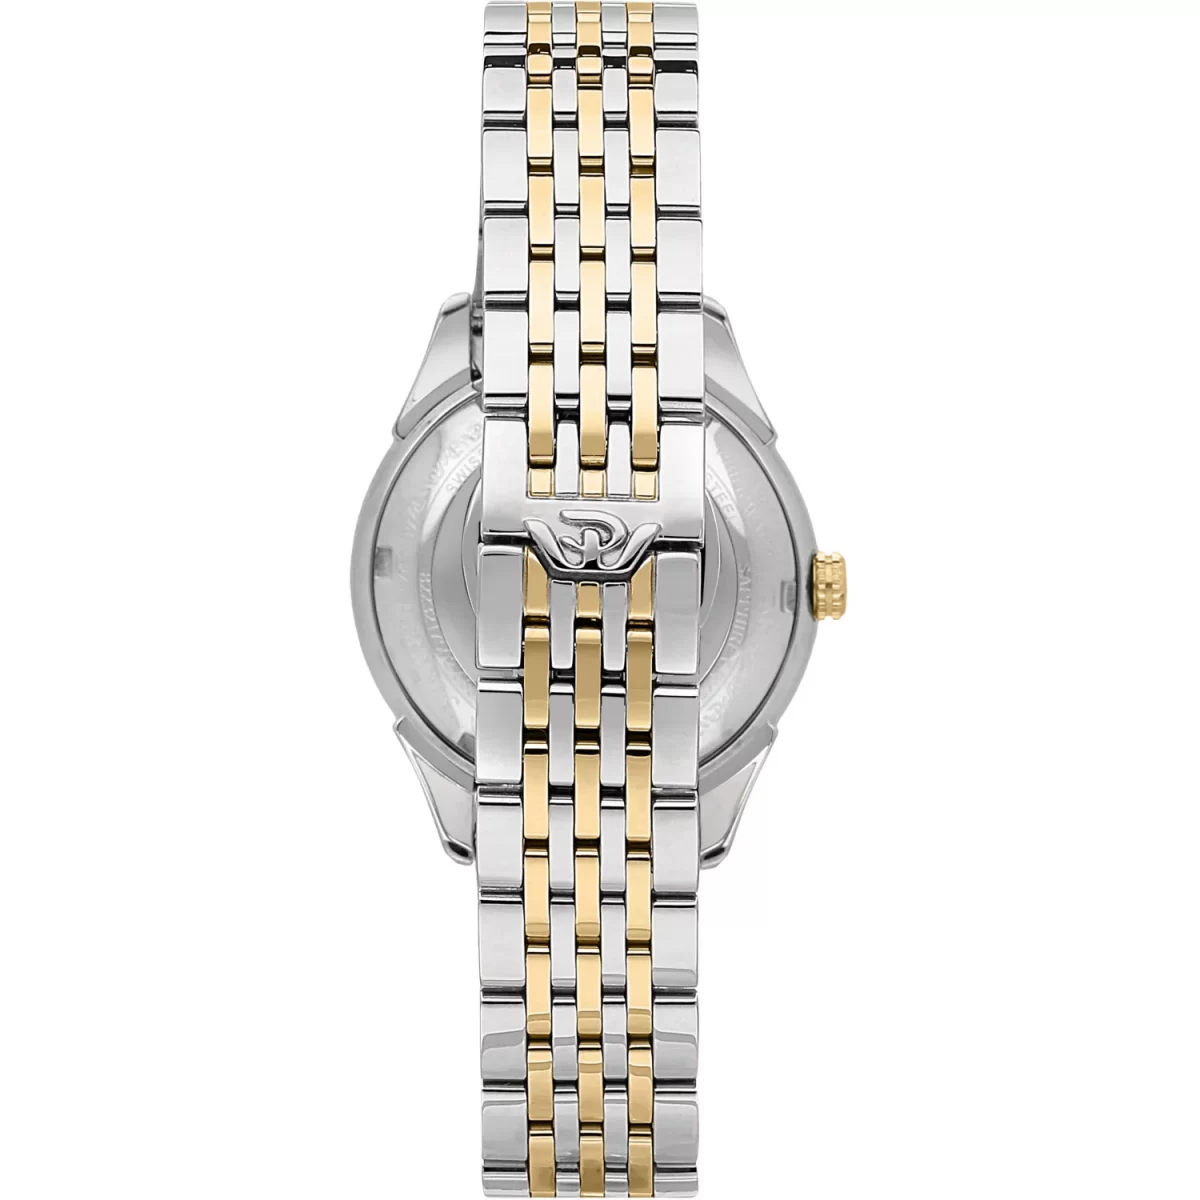 3 orologio philip watch roma r8253217503